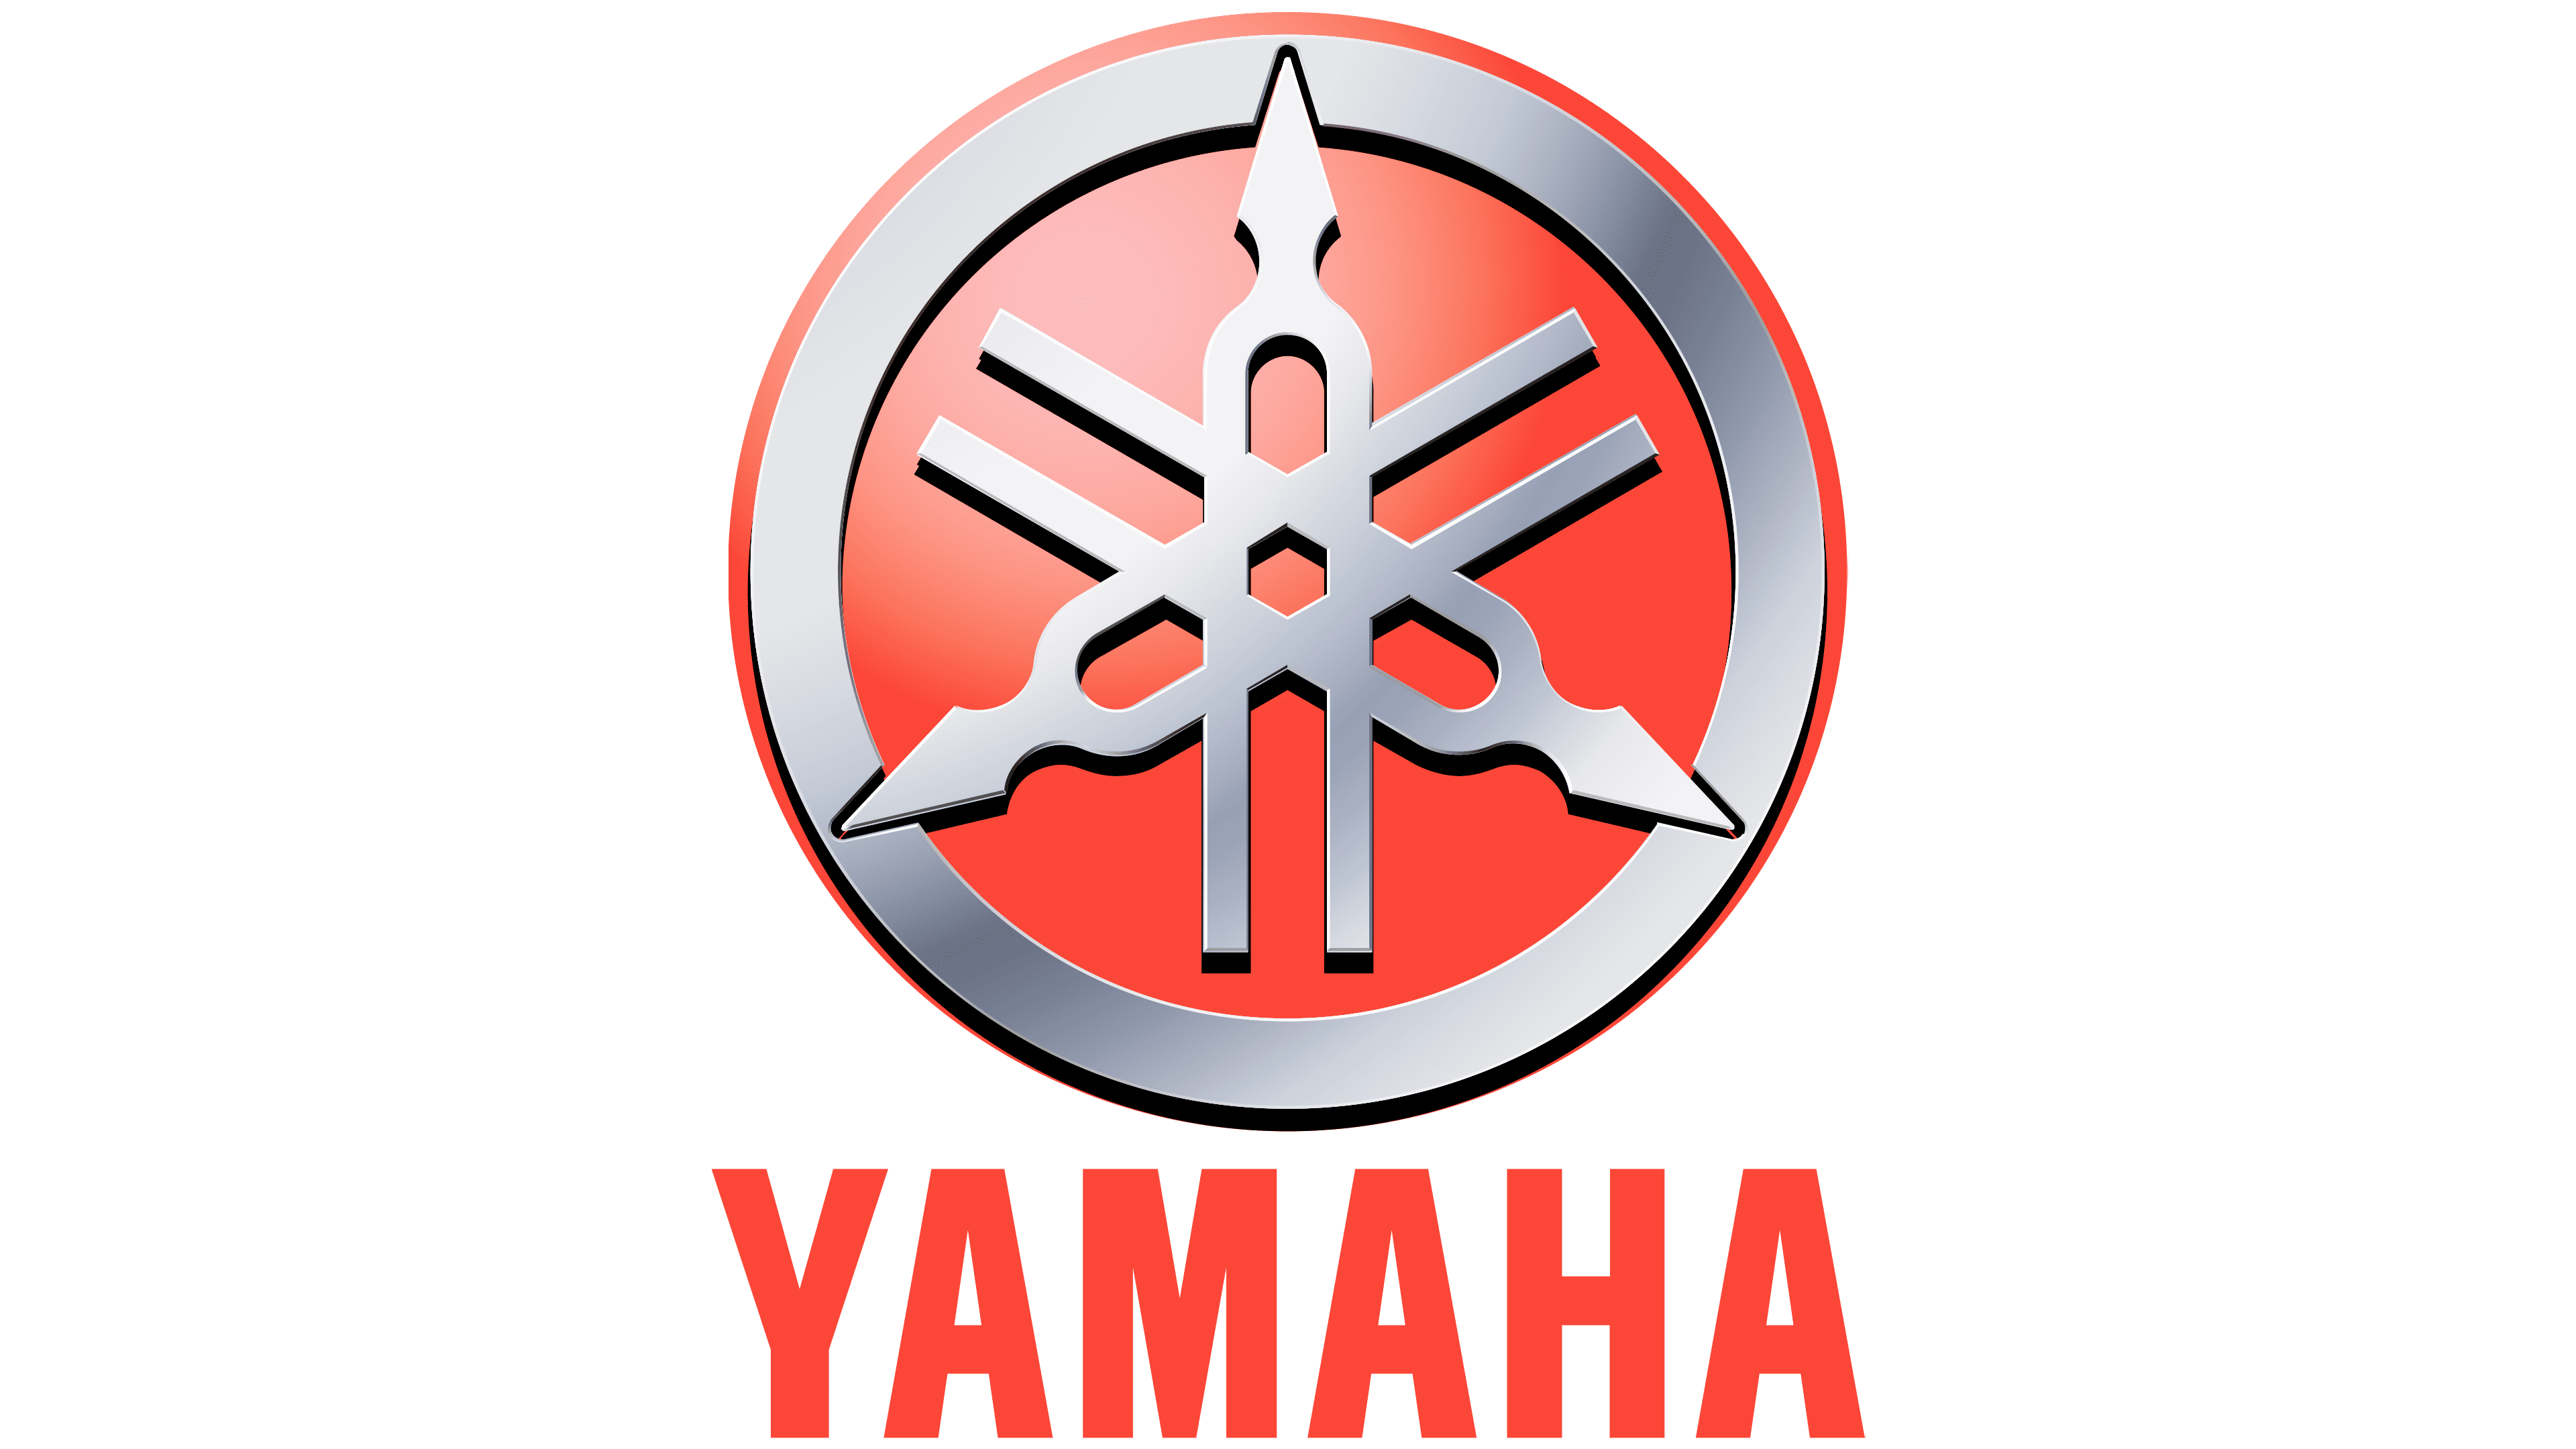 Yamaha logo for disclaimer